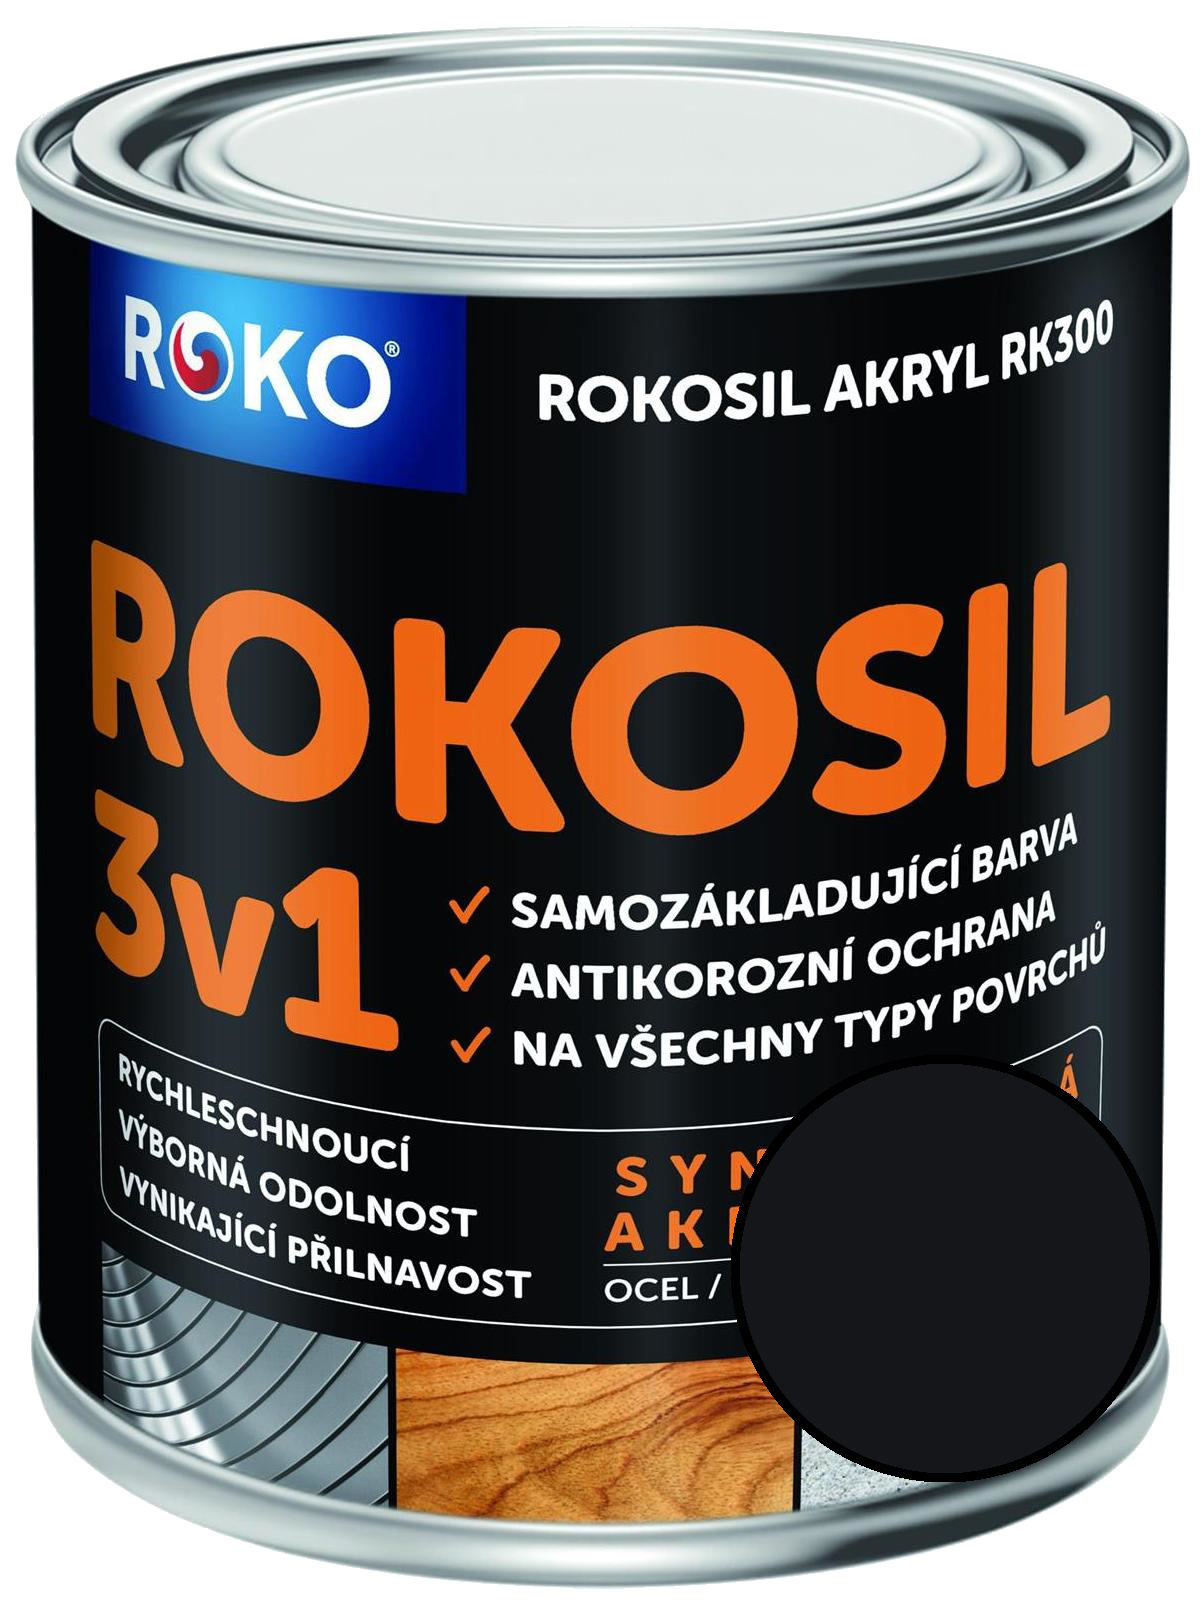 Barva samozákladující Rokosil akryl 3v1 RK 300 1999 černá mat